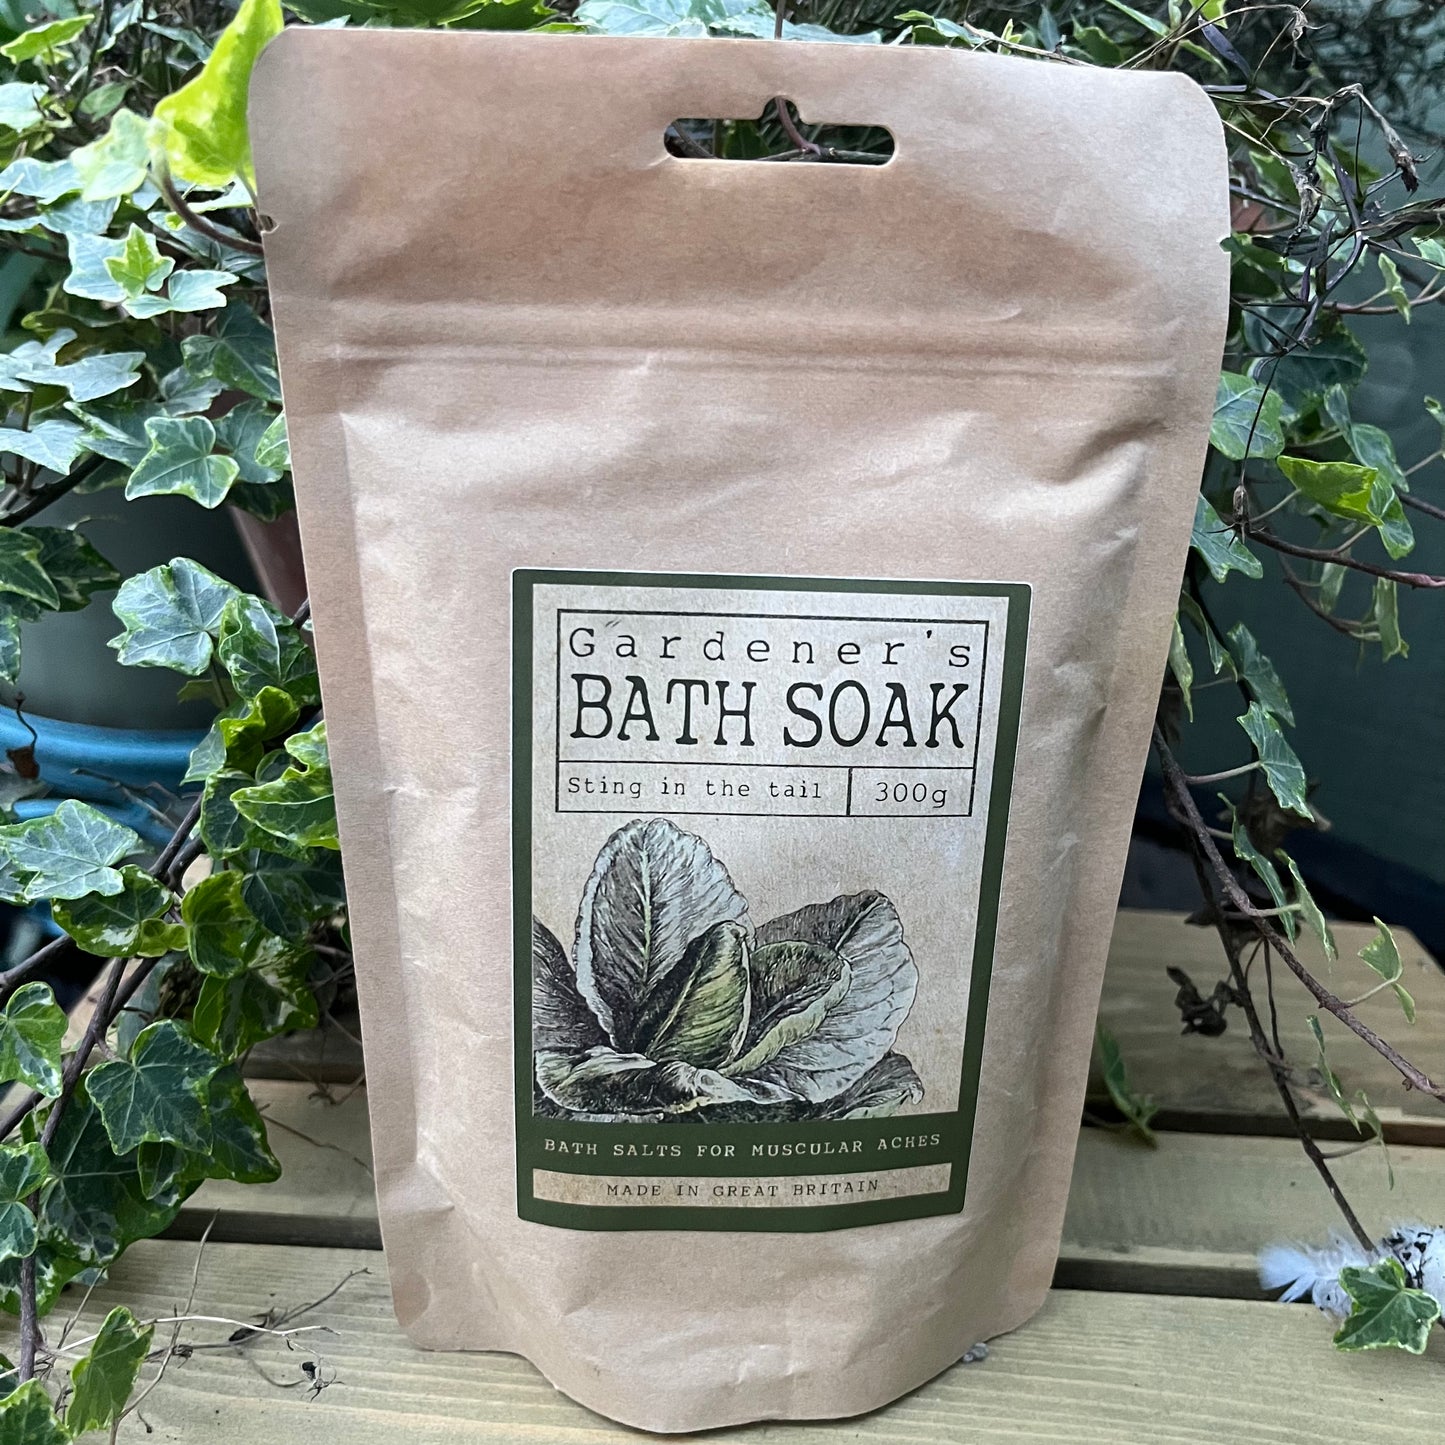 Gardener's Bath Soak | Gift for a Gardener | Muscle Ache Bath Salts